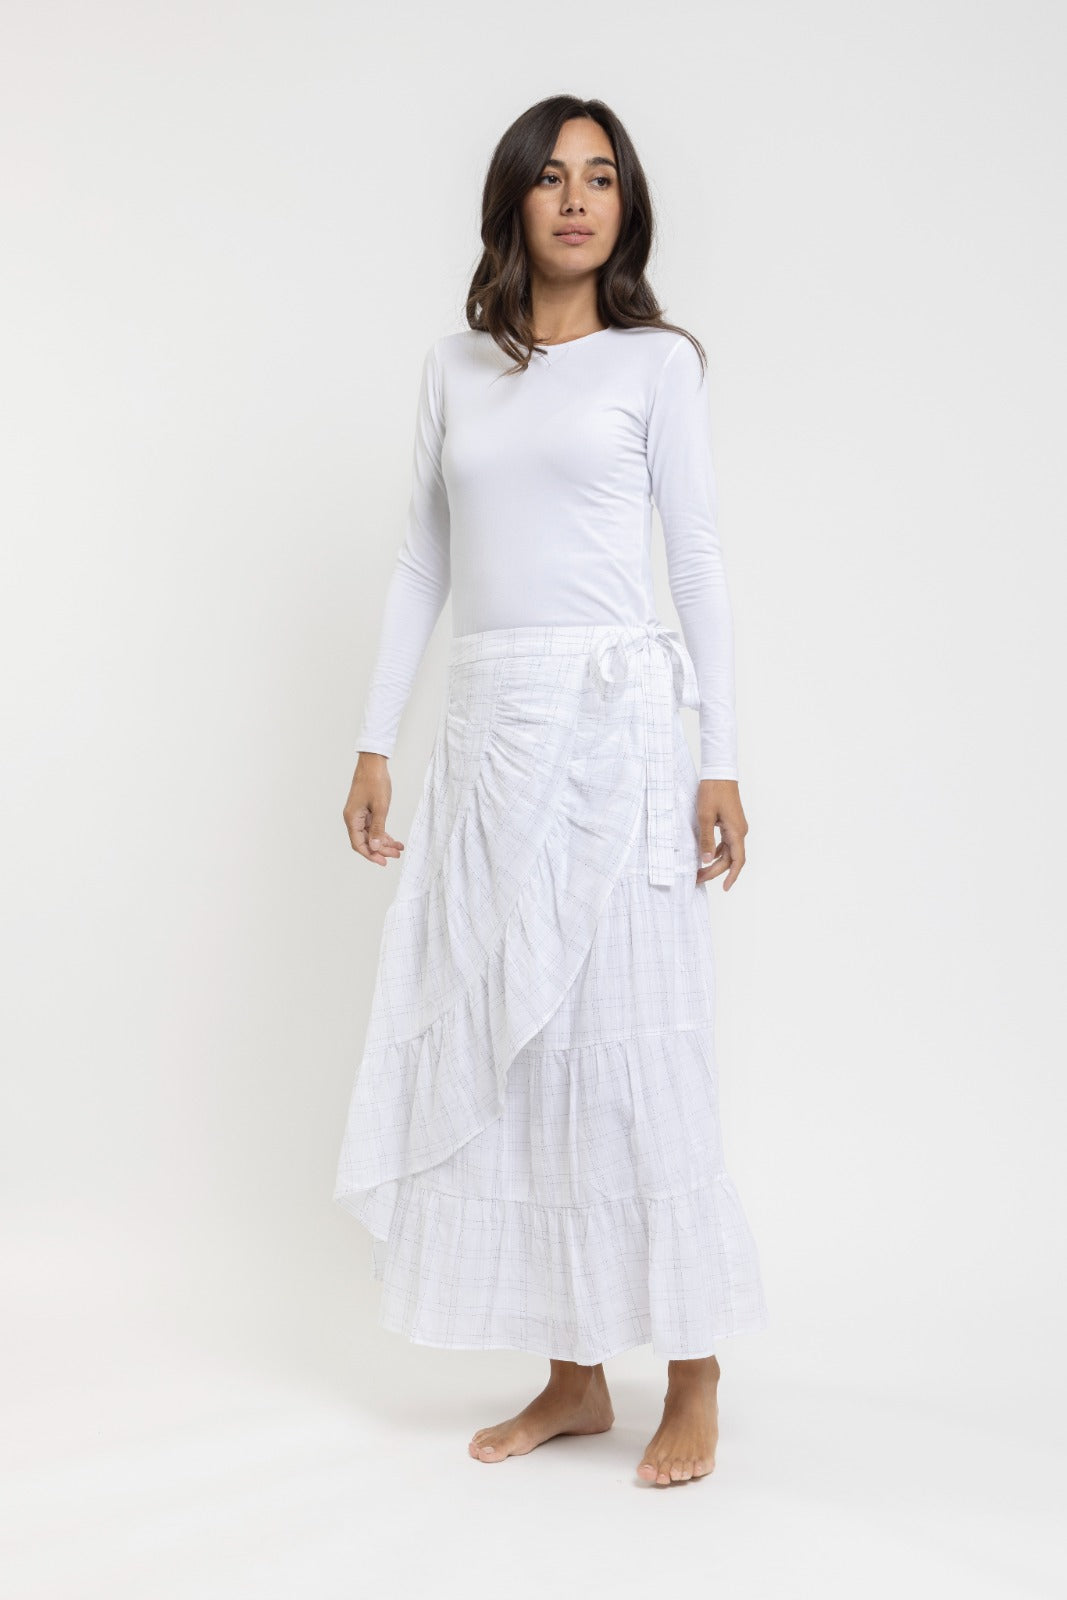 Danna Bella White Layered Wrap Skirt TNS23524-A